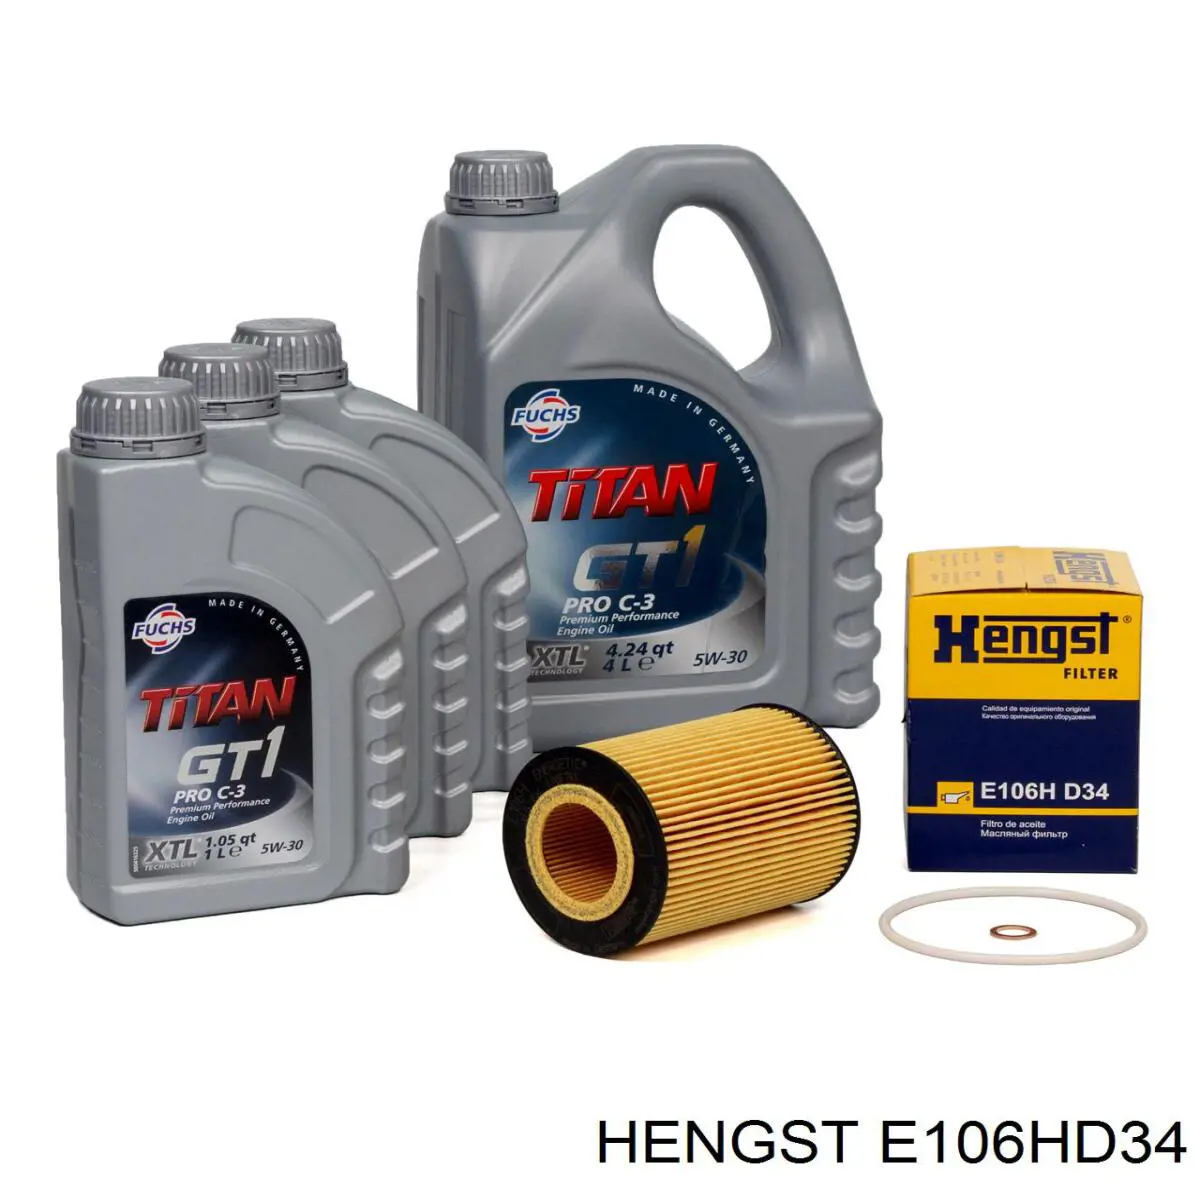 E106HD34 Hengst filtro de aceite